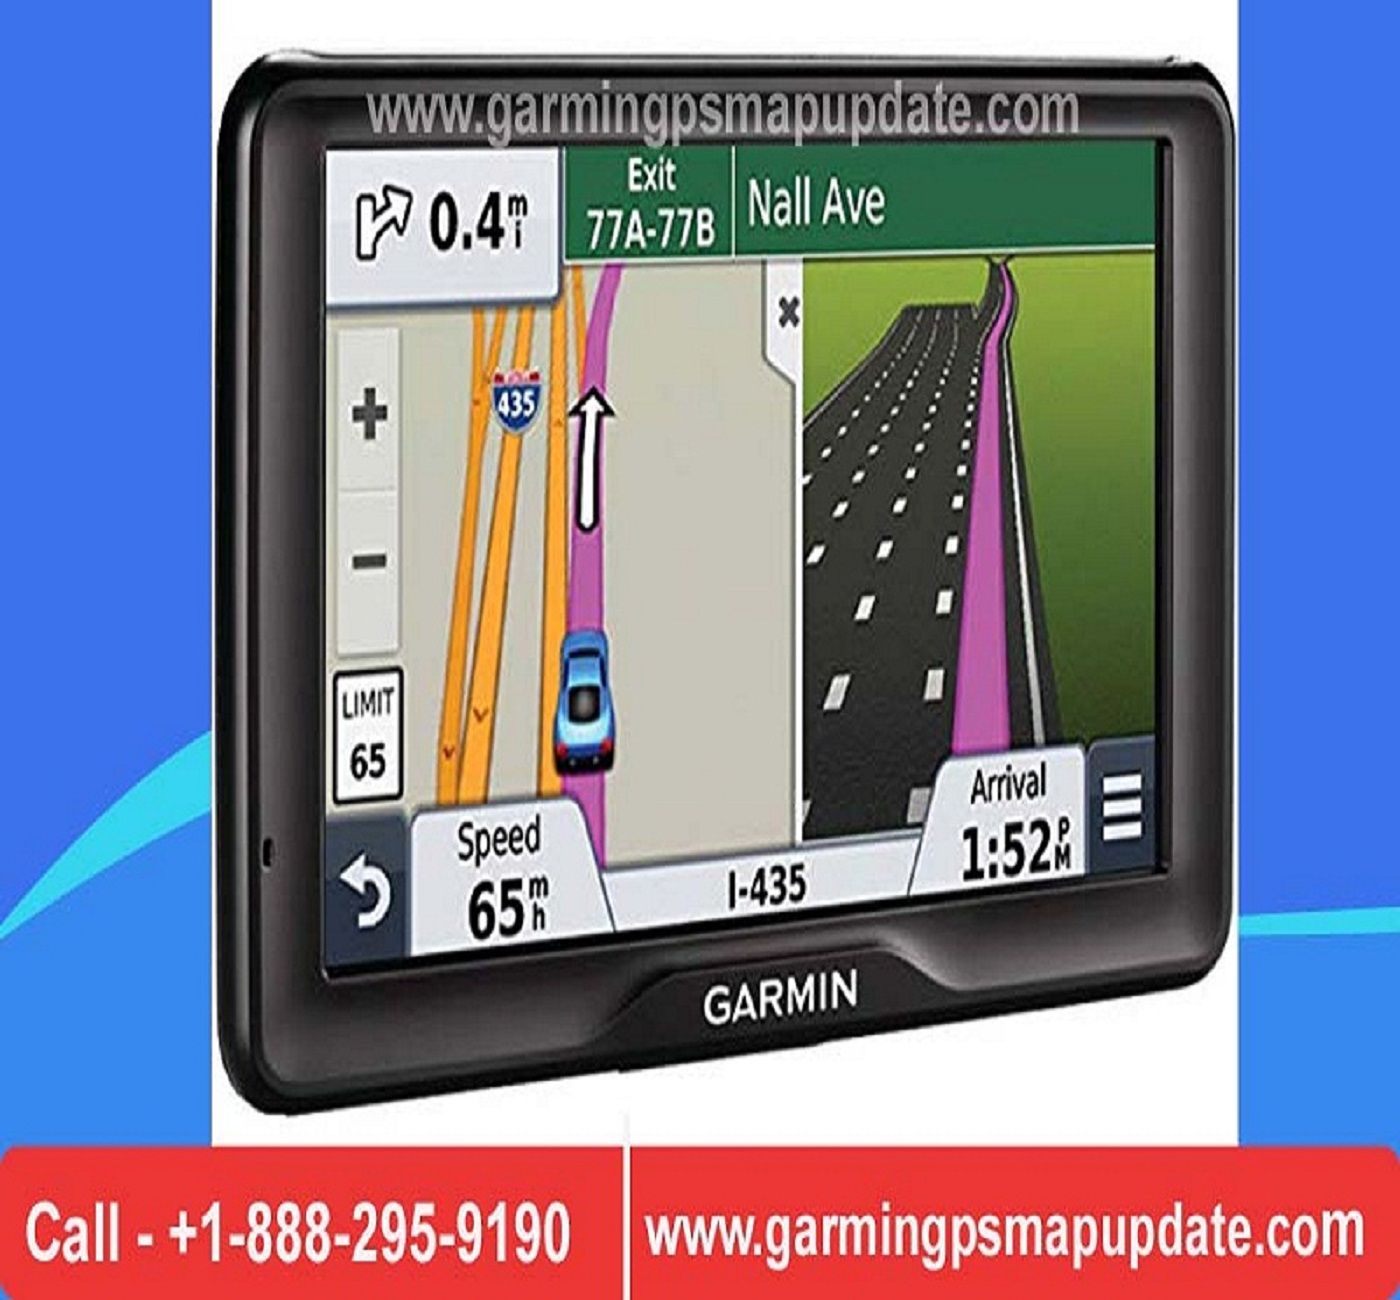 GPS customer support number 1-888-295-9190 Garmin Support Number